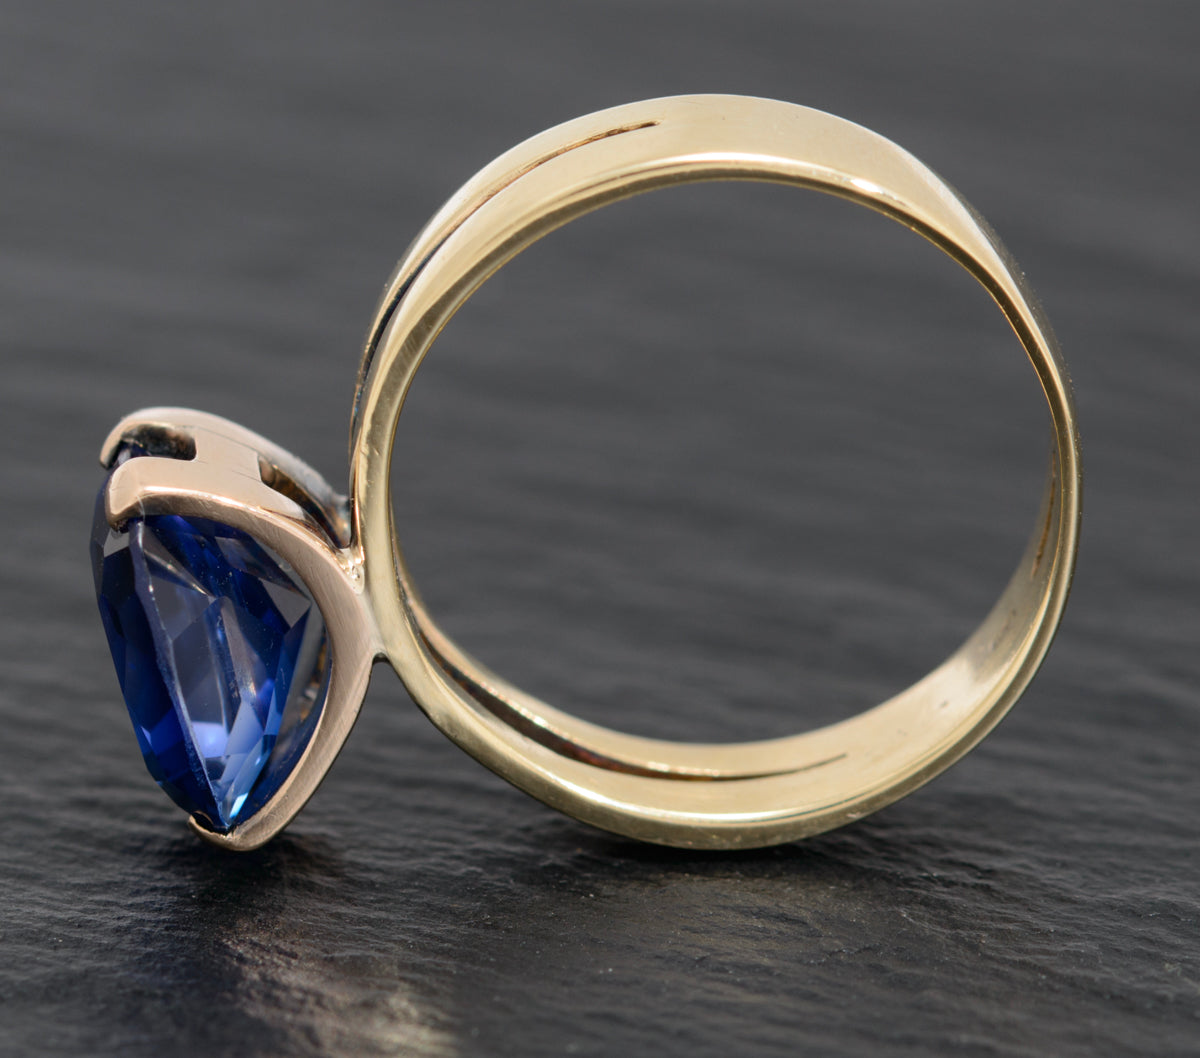 Vintage 9ct Gold & 4.25 Carat Lab Created Sapphire Ring Cushion Cut (A1600)